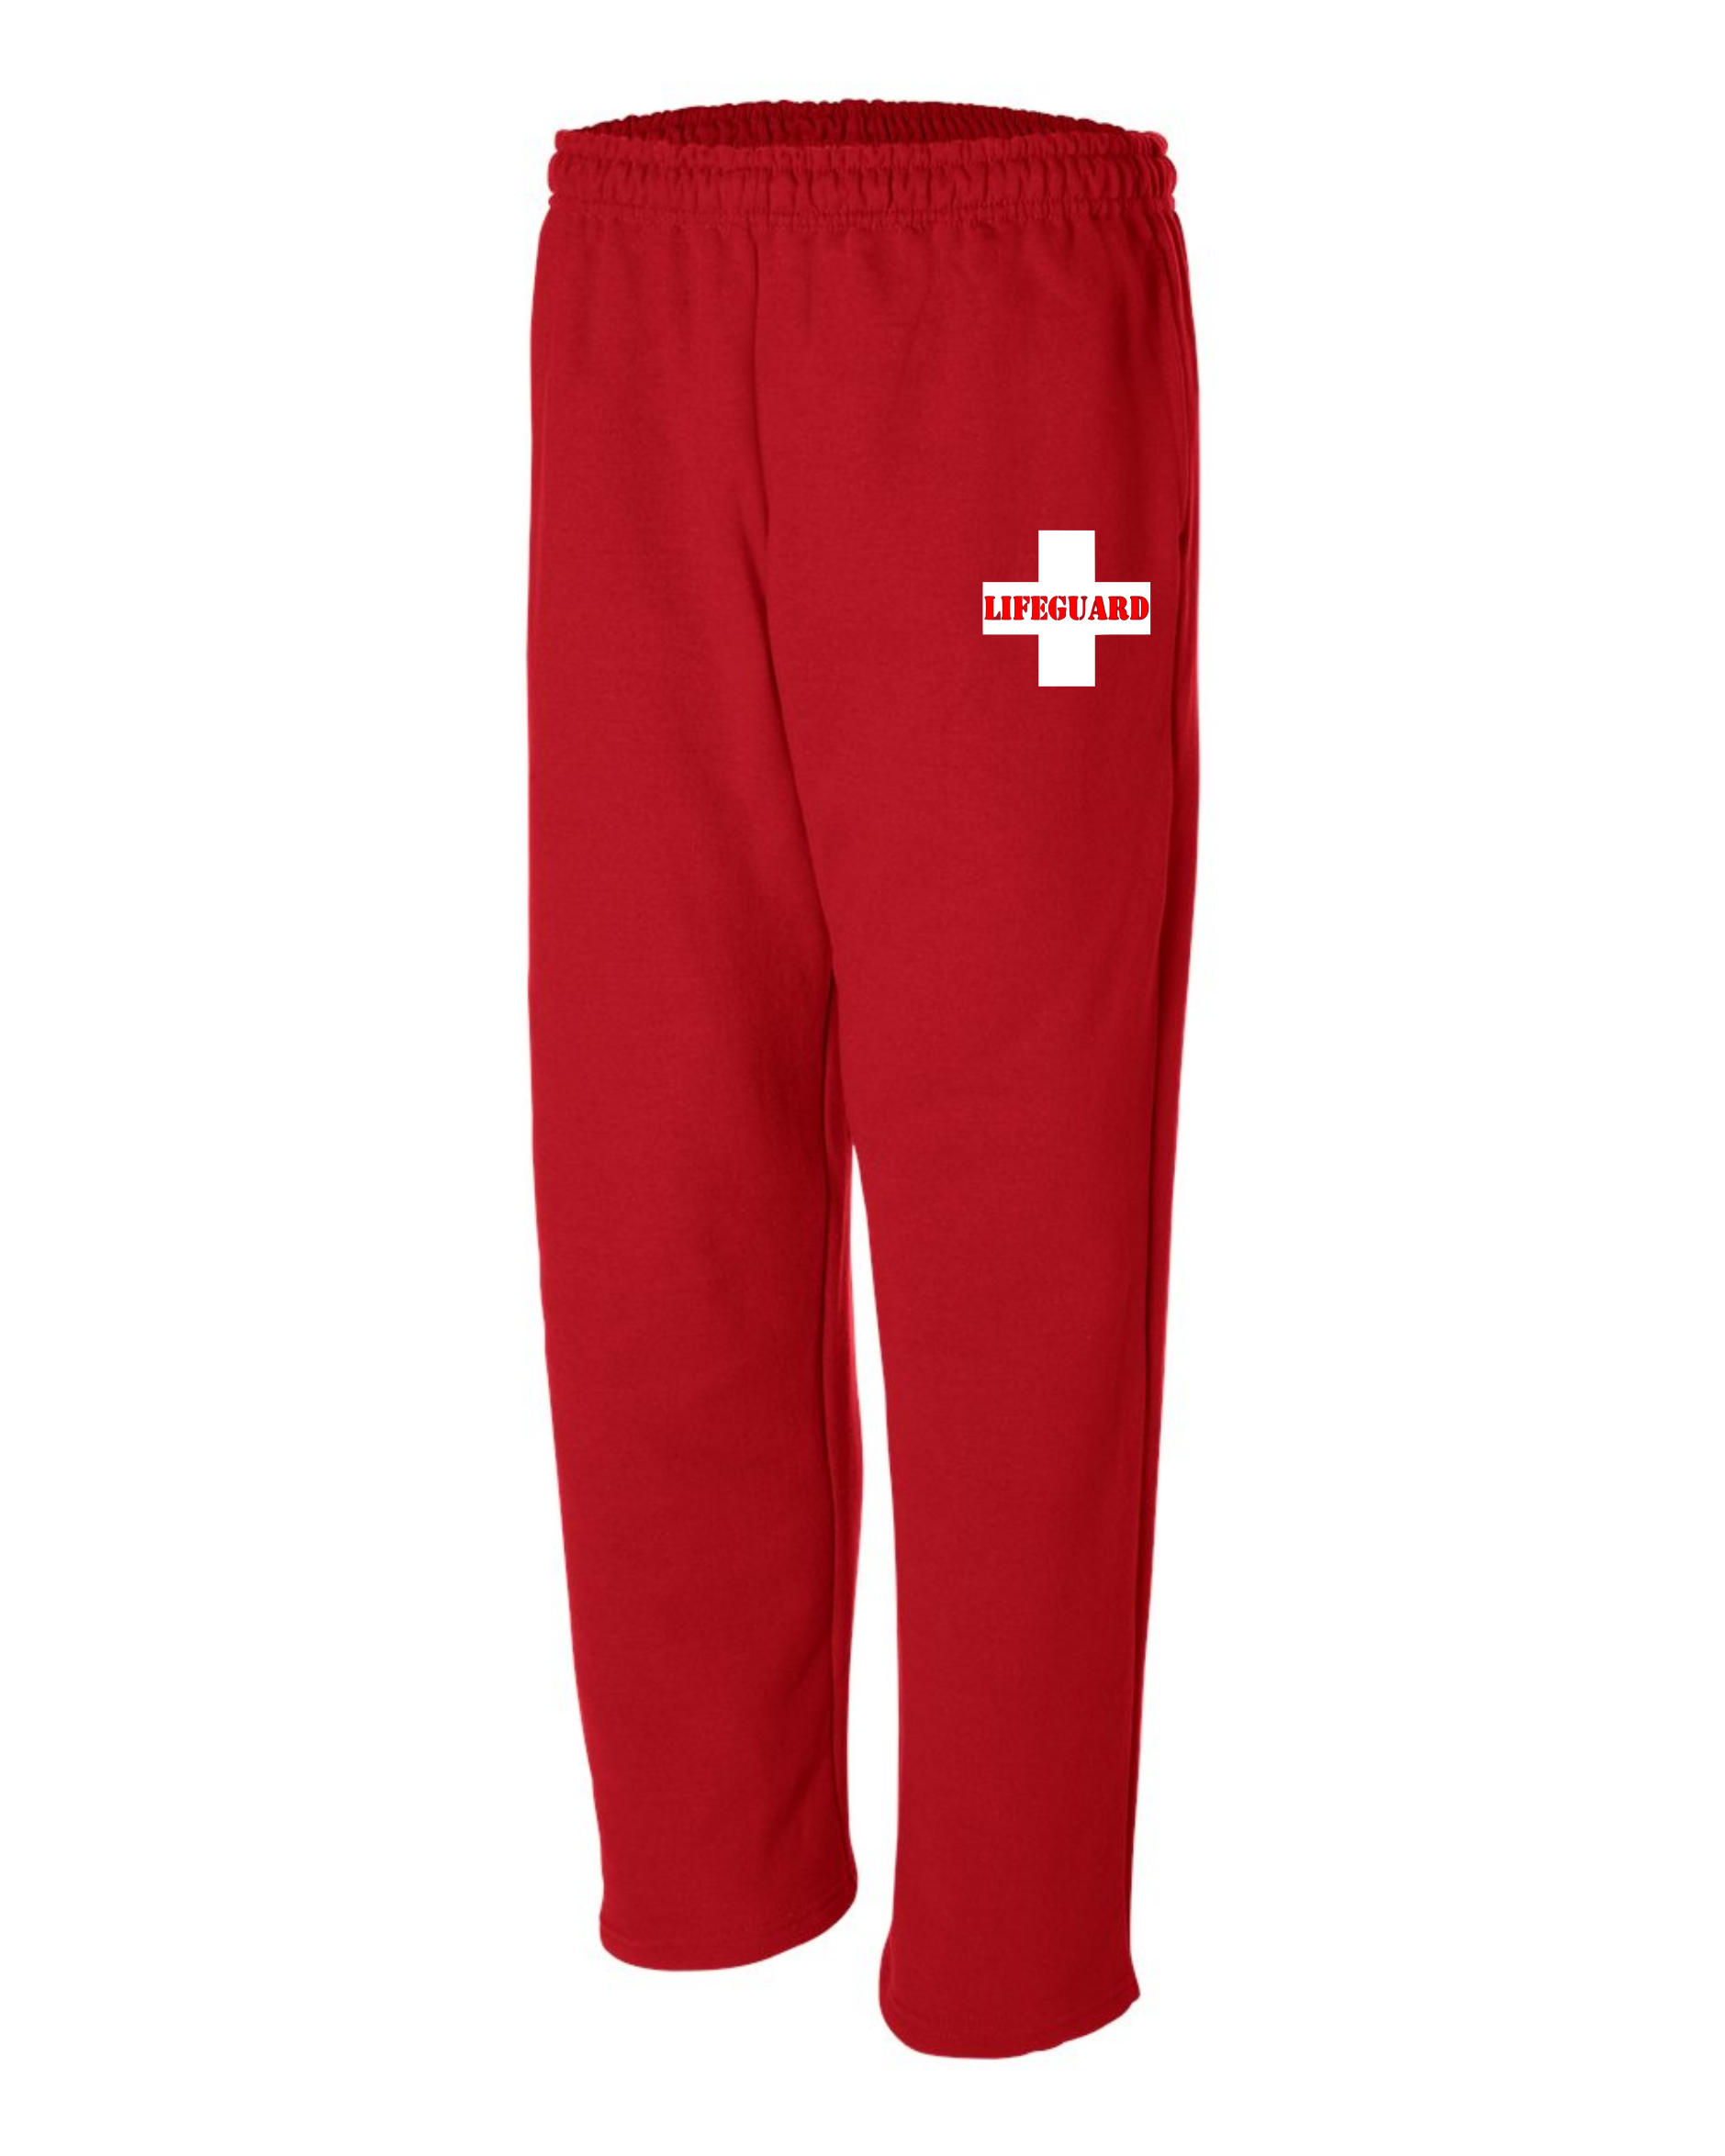 Lifeguard – Sweatpants (Cross Logo) - Unique Country Store & More